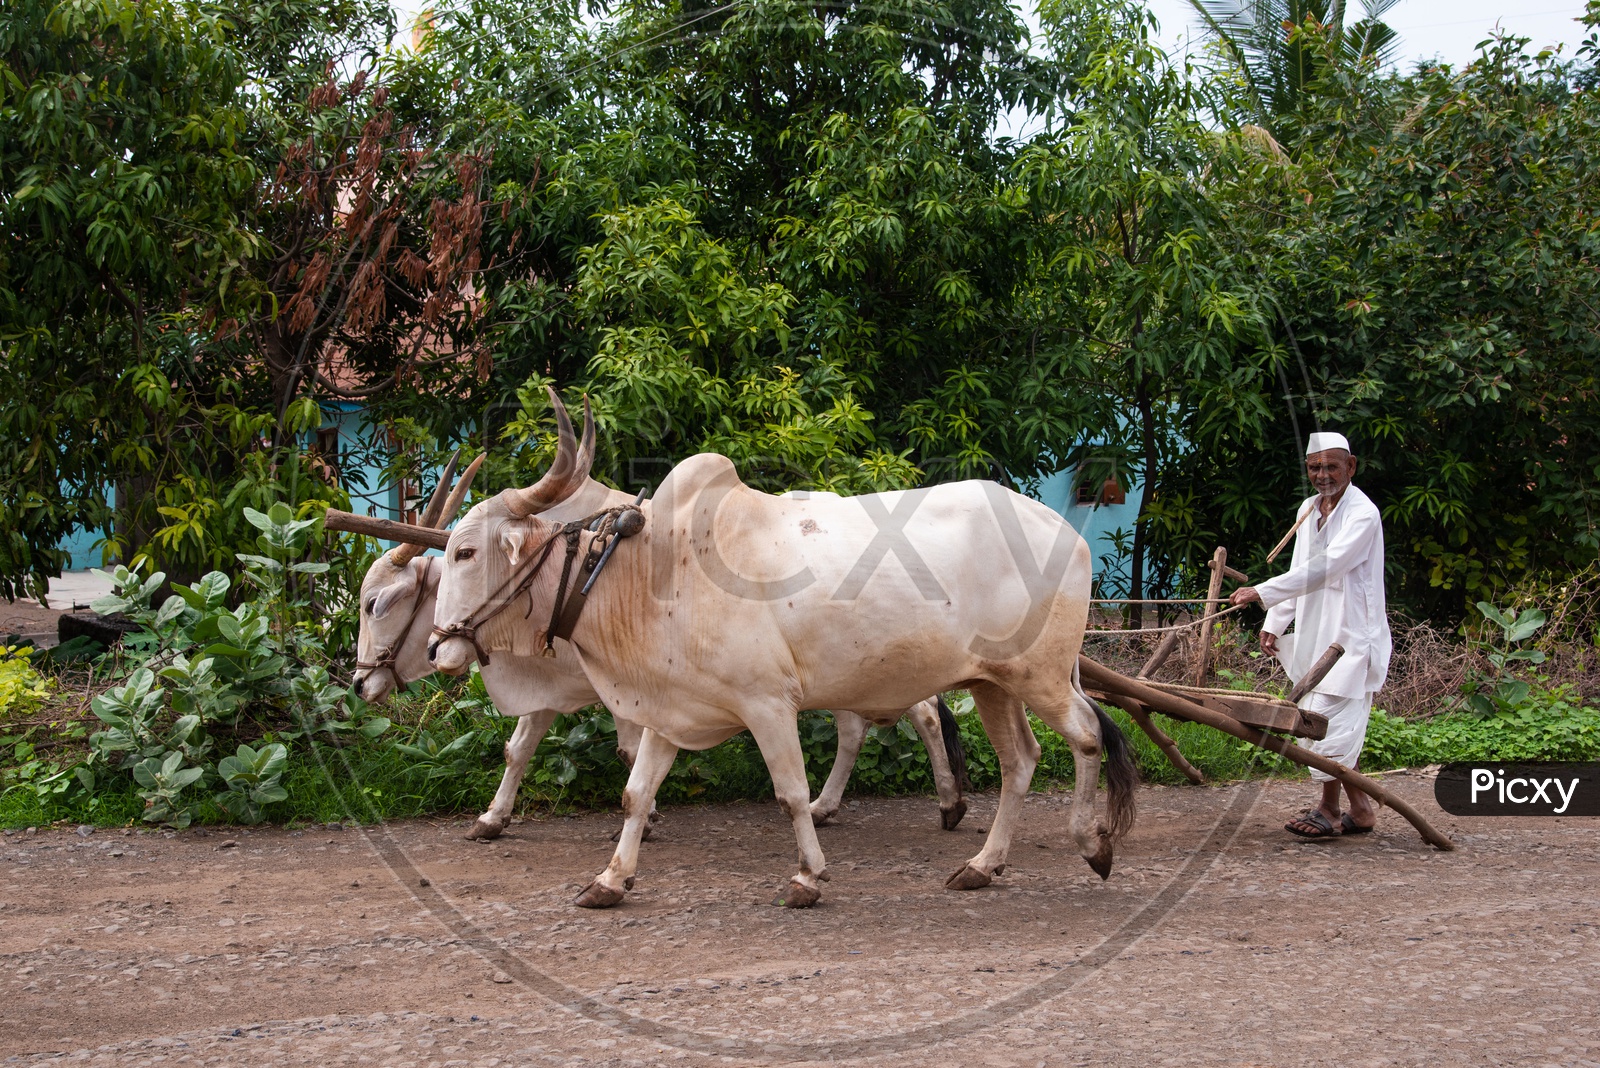 Farmer with his bullocks in a village in Maharashtra